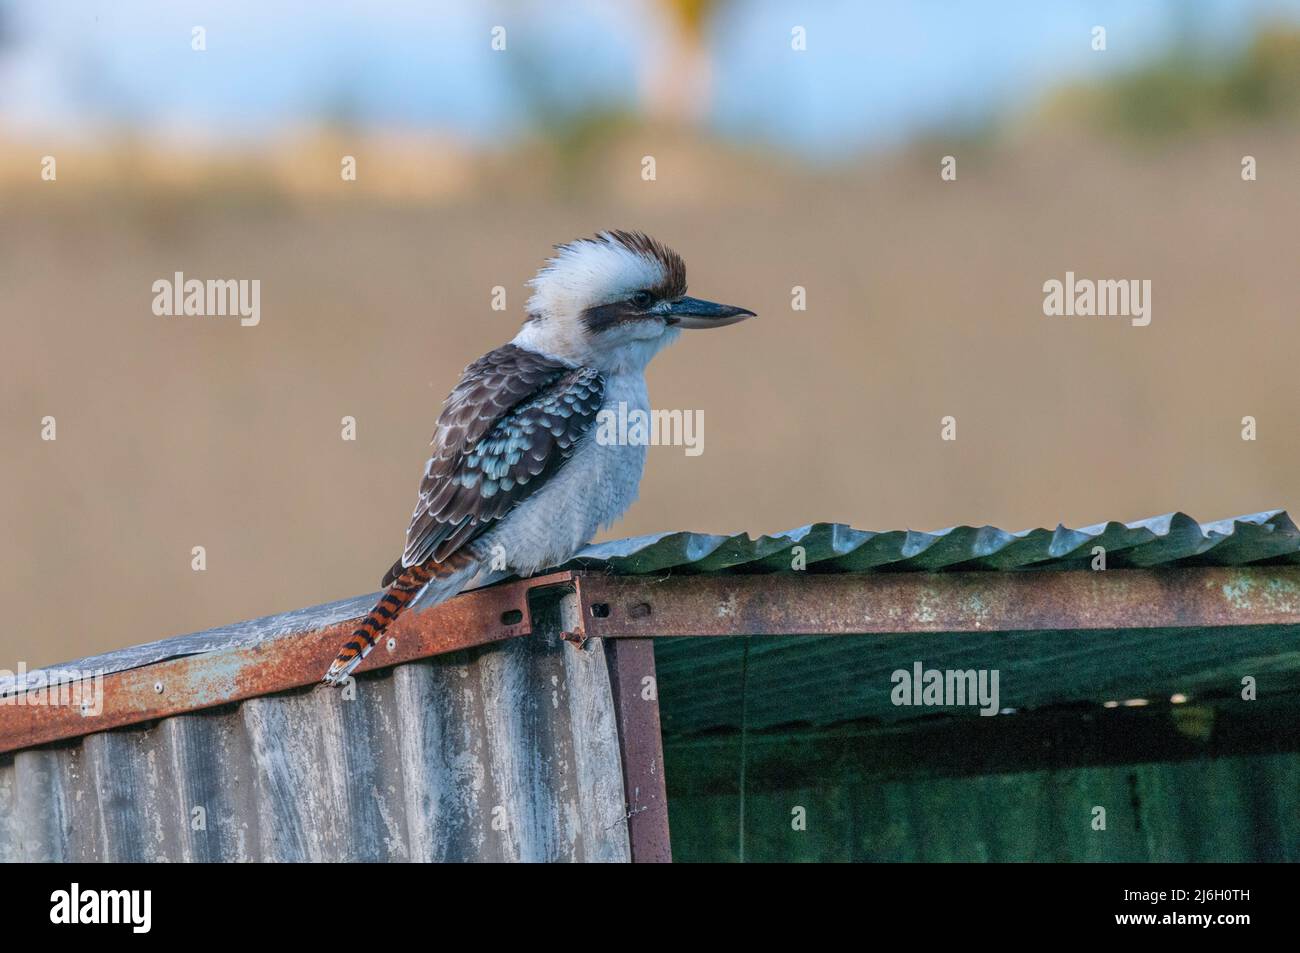 Australian Kookaburra, The laughing kookaburra is a bird in the kingfisher subfamily Halcyoninae, seen here resting on an old tin shed Stock Photo